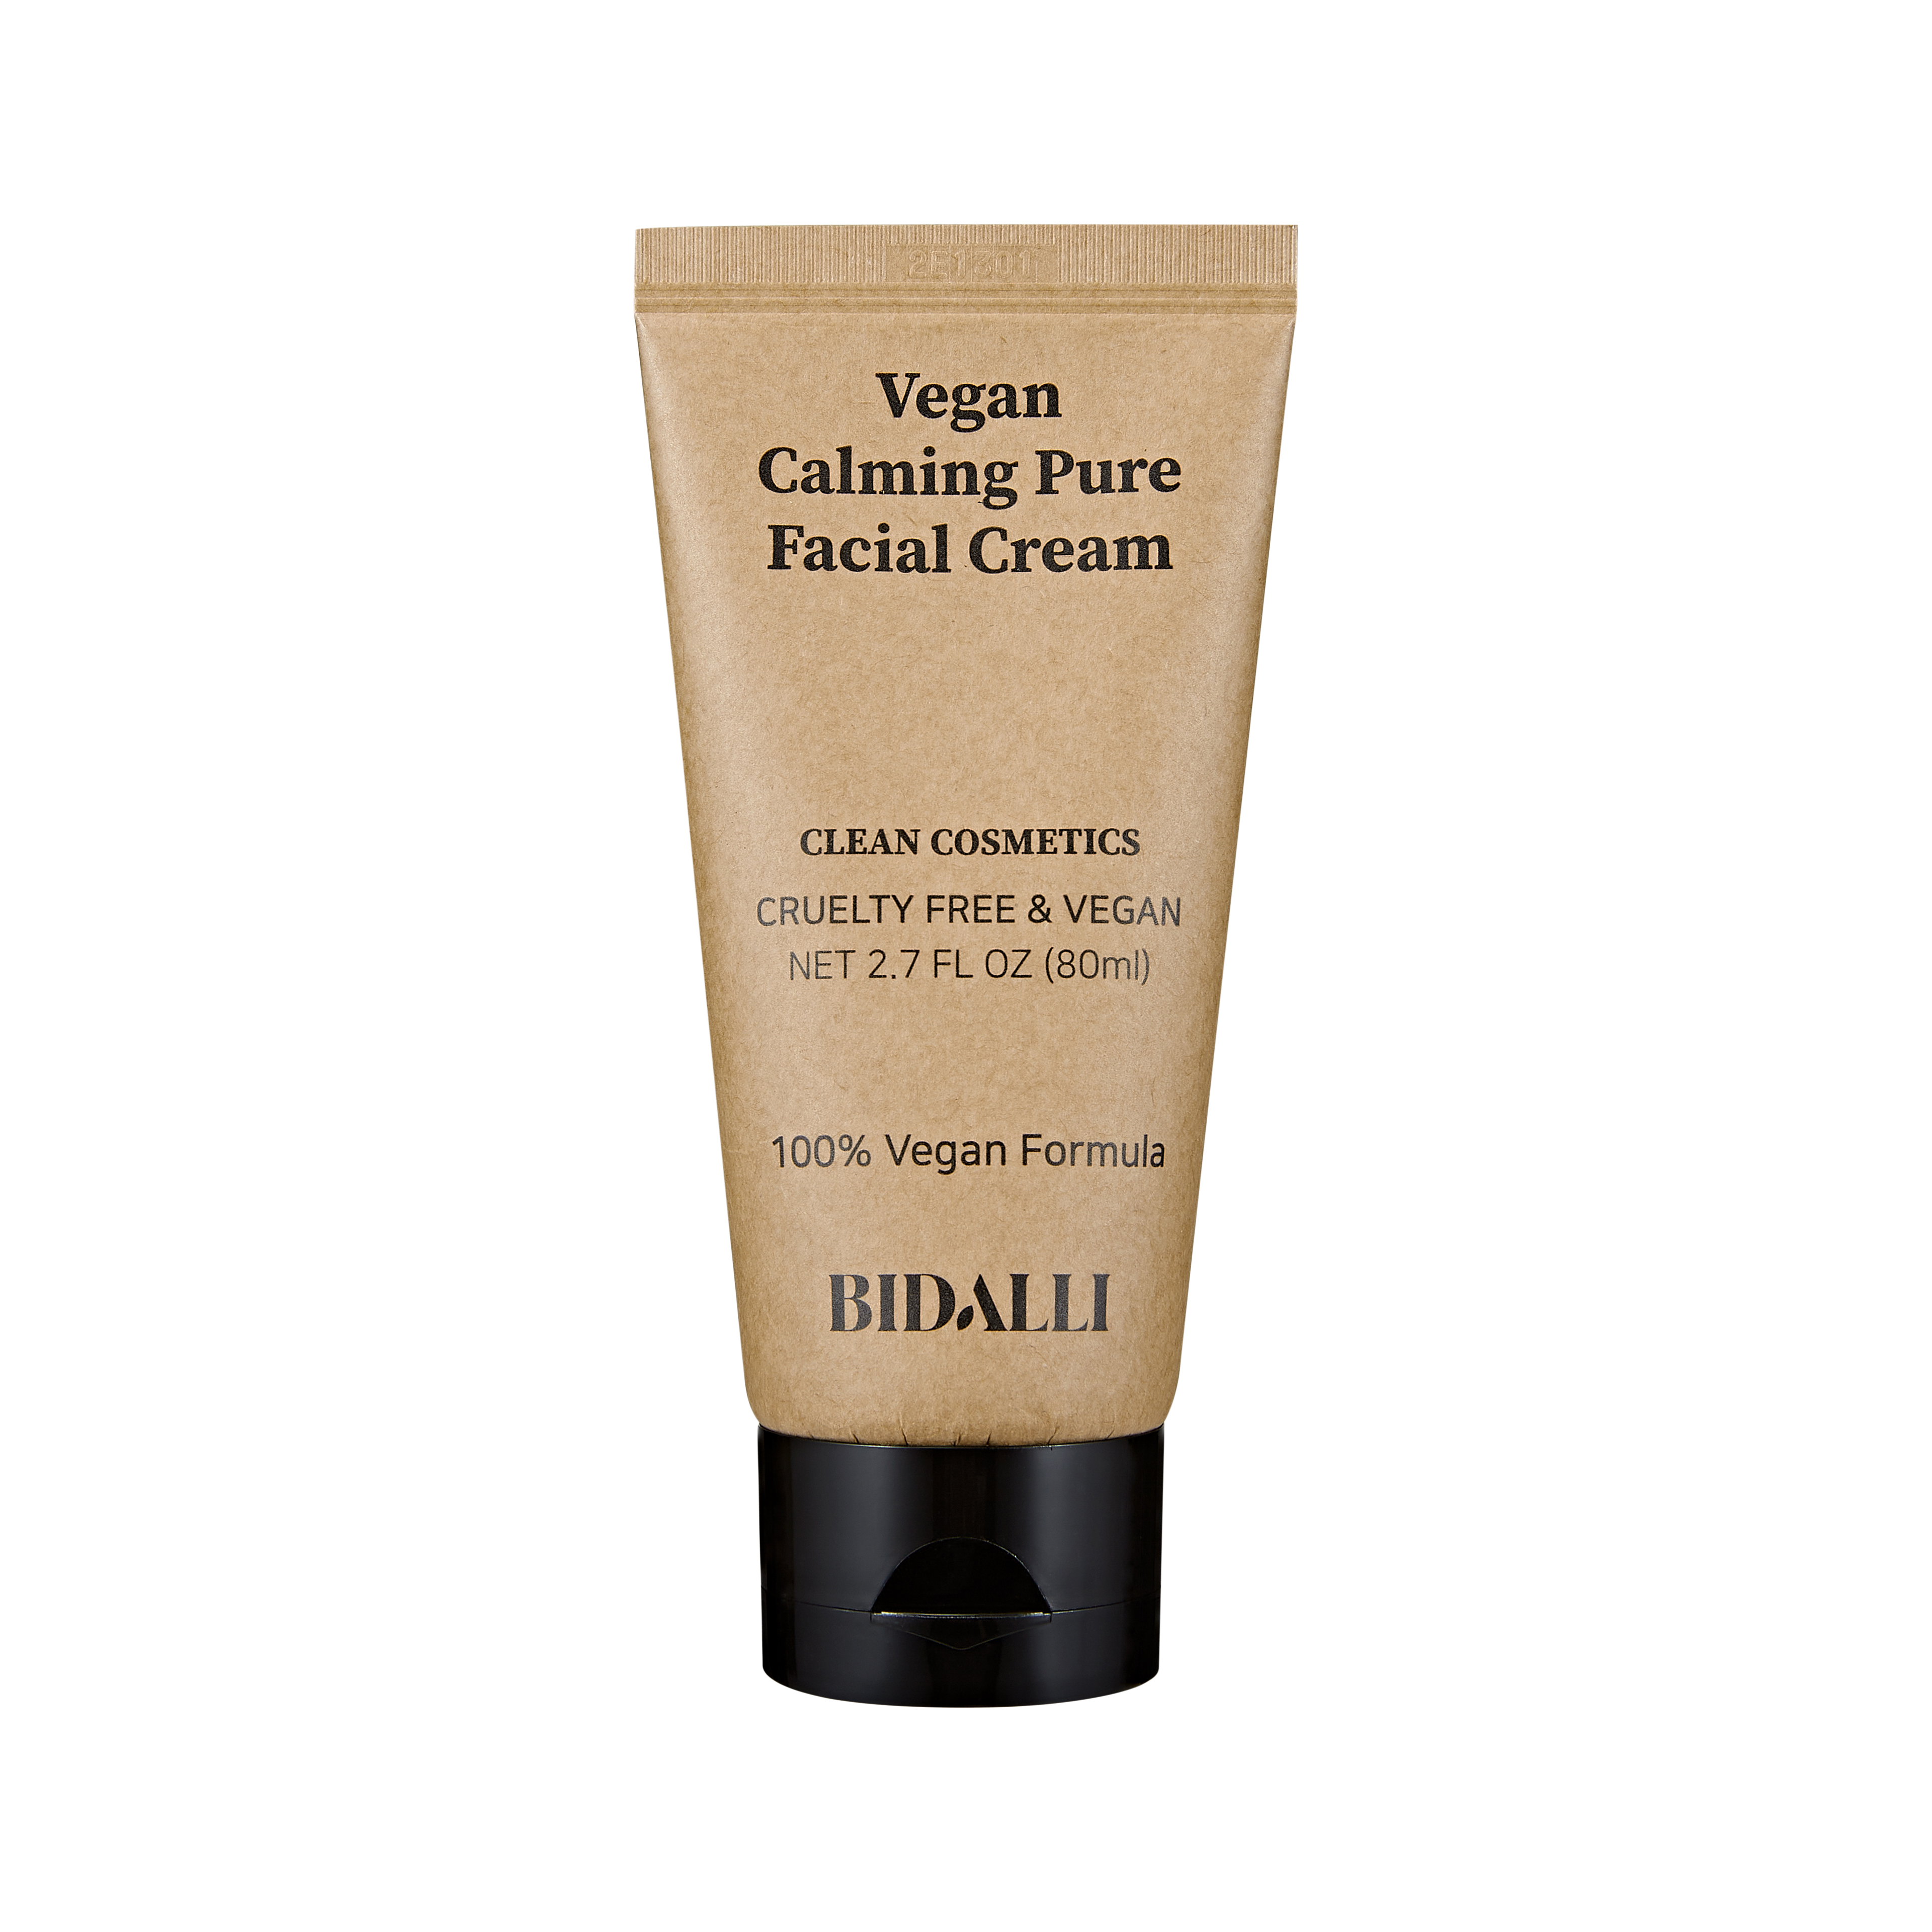 BIDALLI Vegan Calming Pure Facial Cream